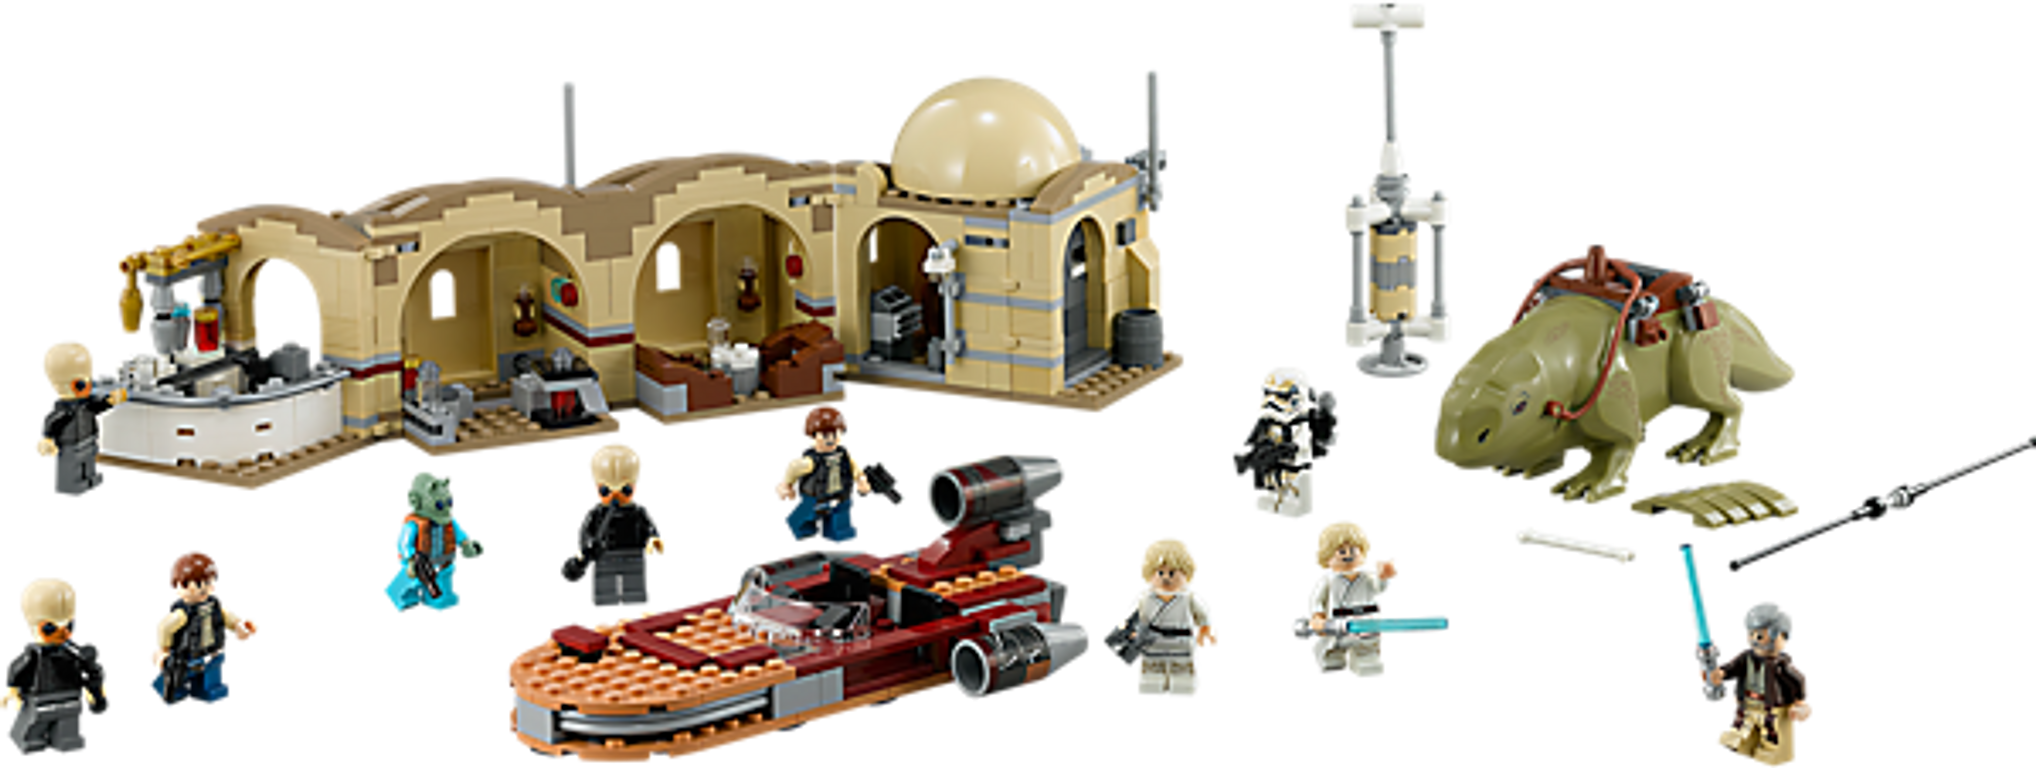 LEGO® Star Wars Mos Eisley Cantina components